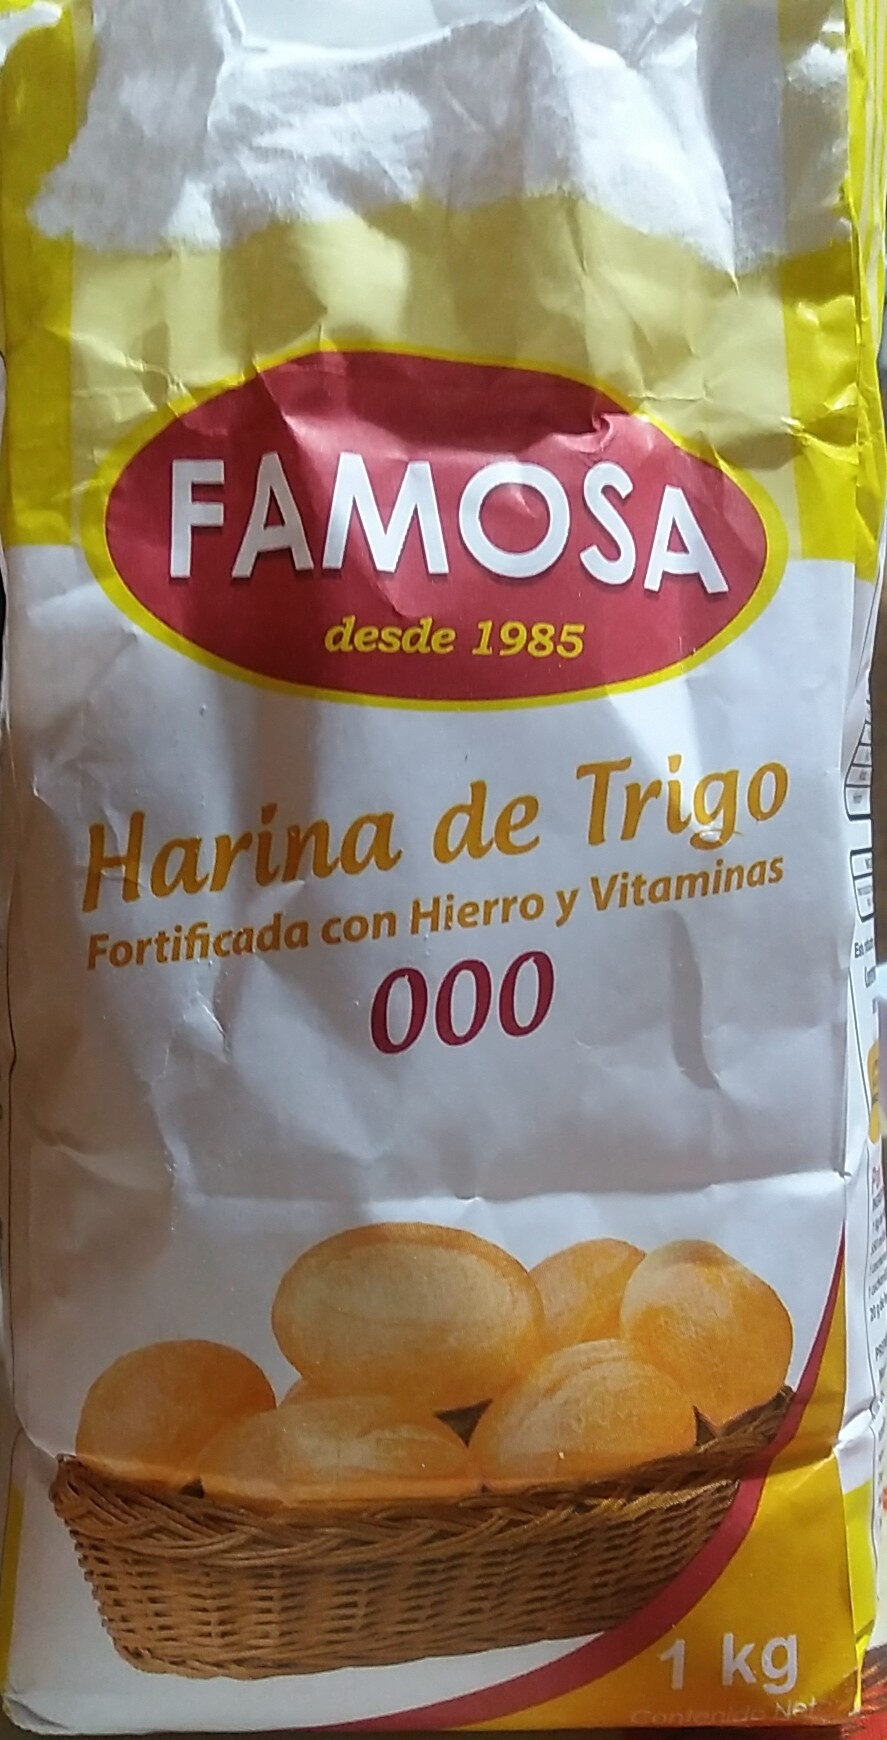 Harina de Trigo 000 - Product - es